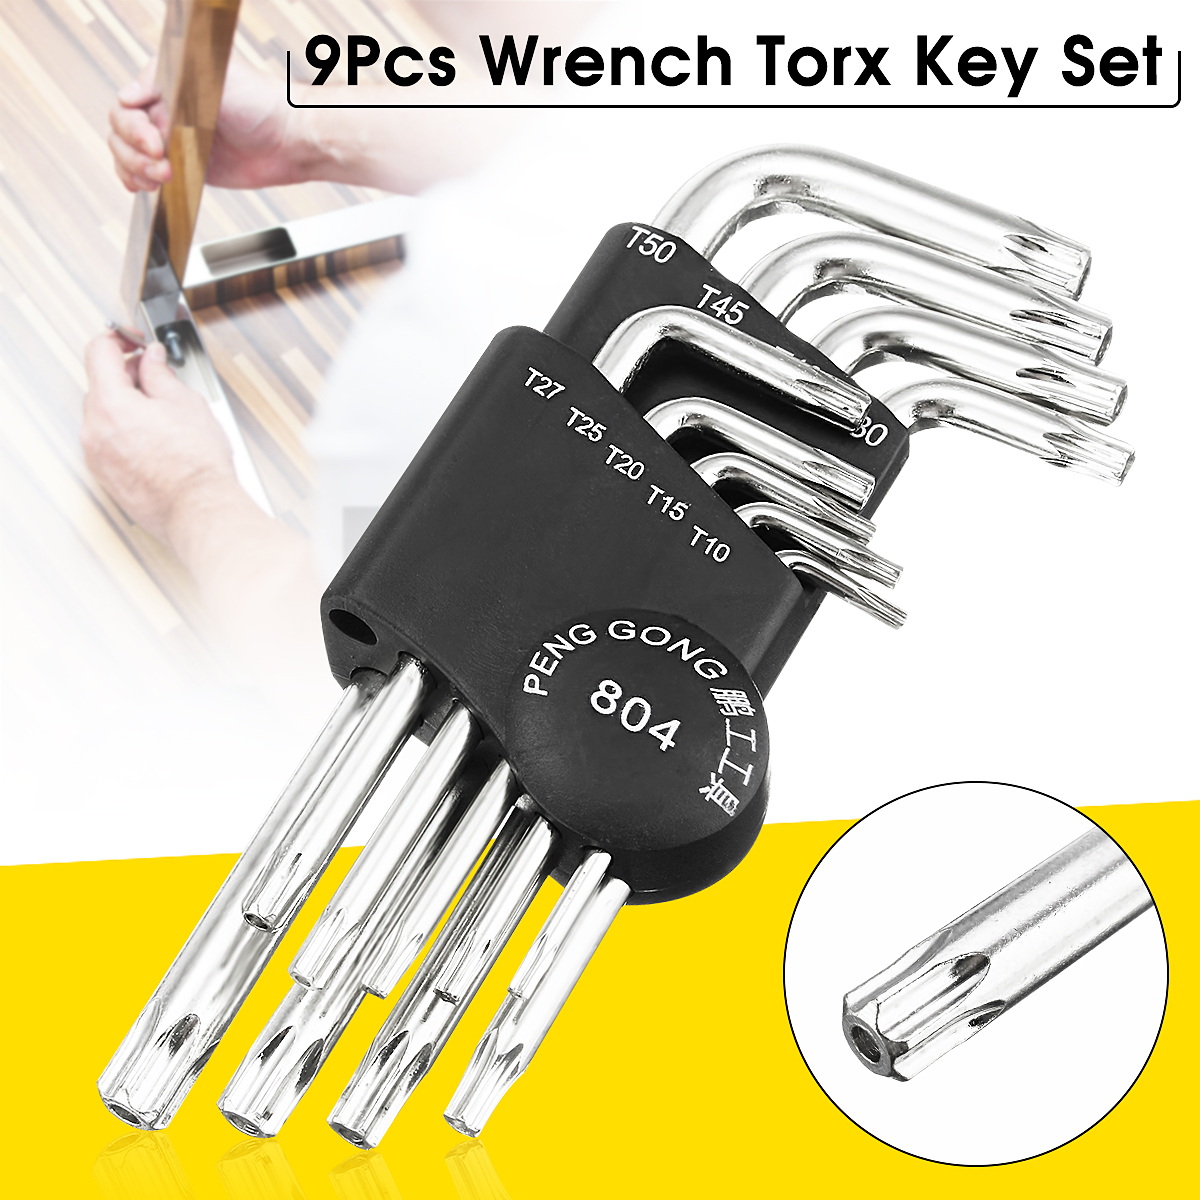 PENGGONG-804-9pcs-Torx-Hex-Wrench-Screwdriver-Star-Key-L-Wrench-Set-1296787-3